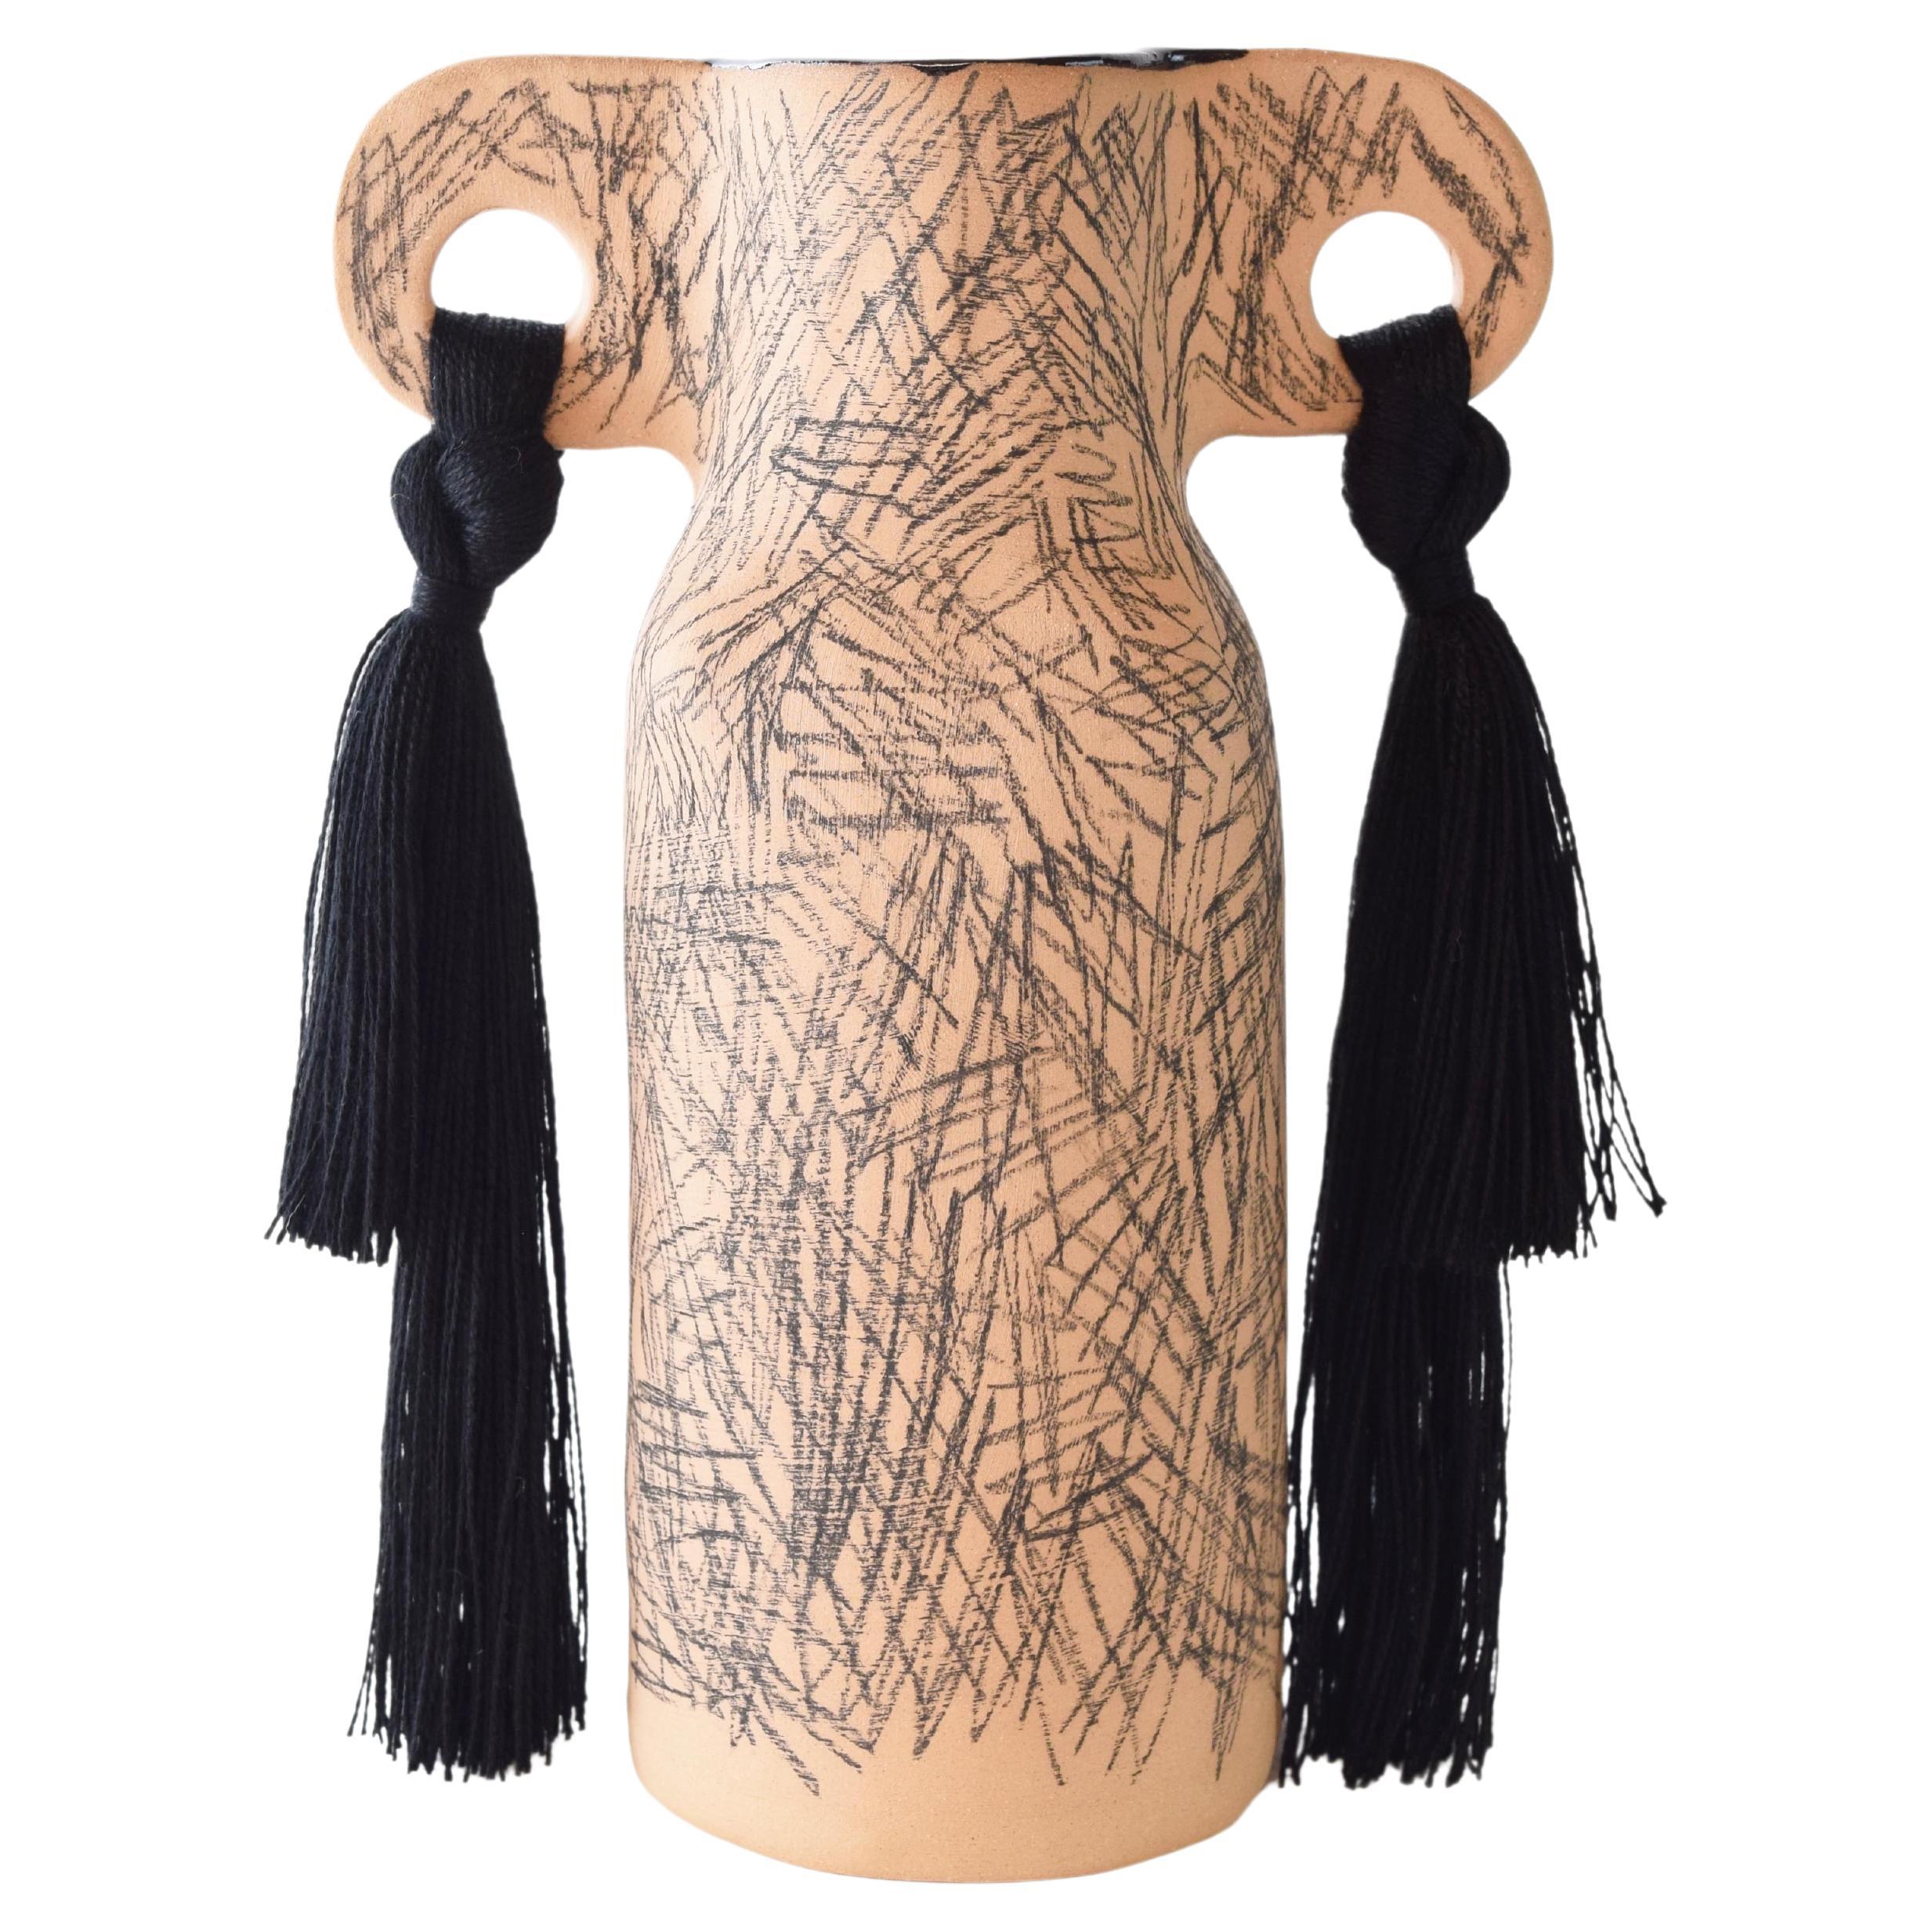 OOAK Handmade Ceramic Vase #606 - Hand Drawn Black Underglaze & Tencel Fringe